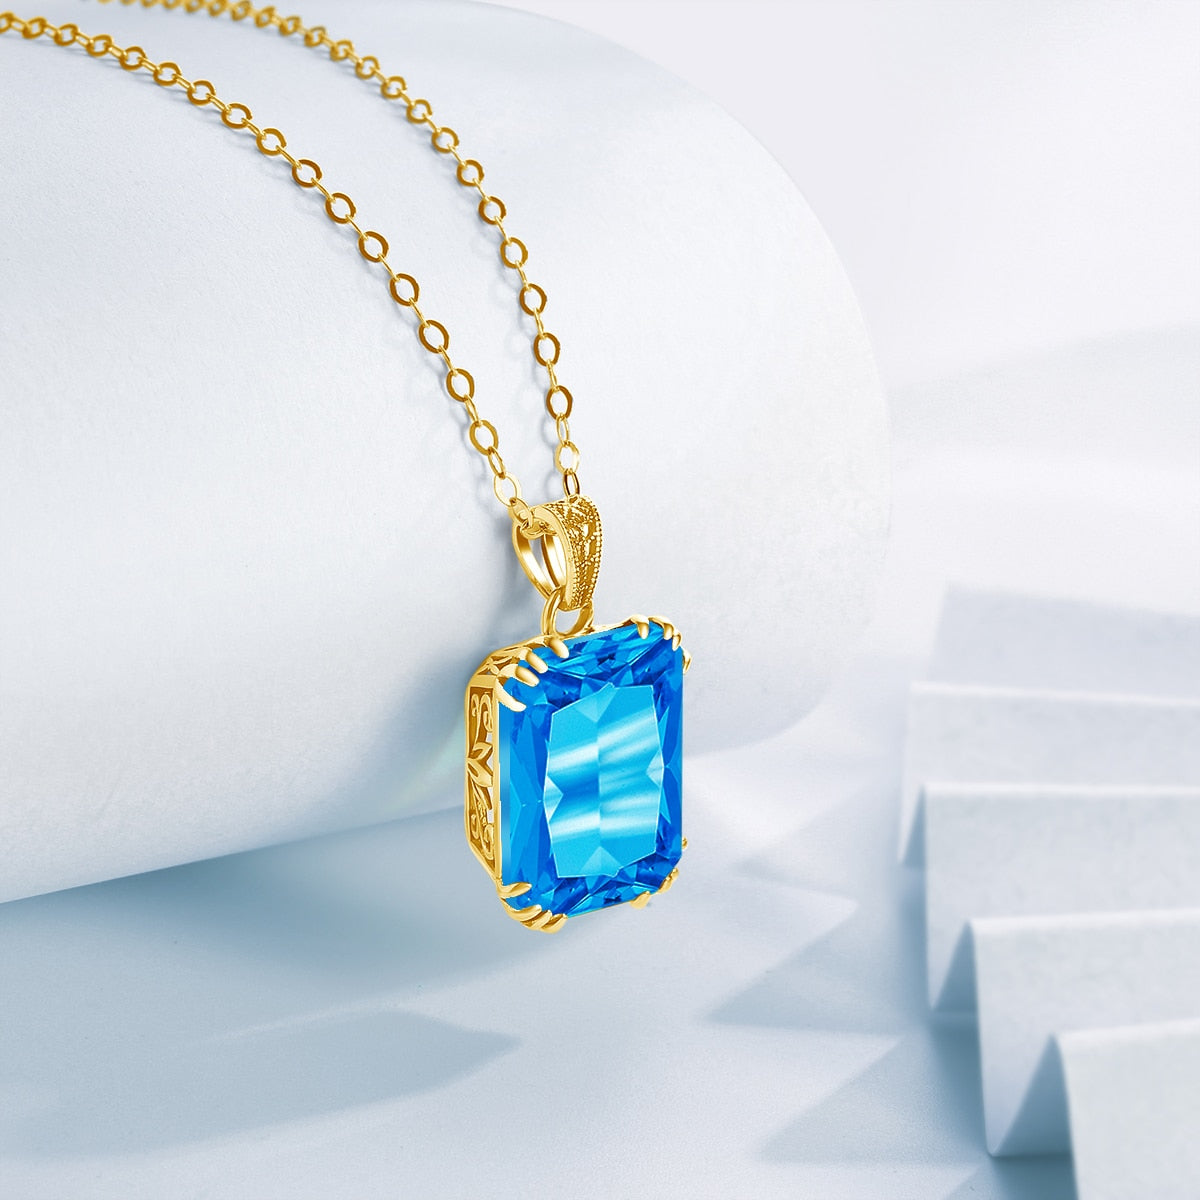 SILVERCHAKRA 925 Sterling Silver Necklace For Women Luxury Aquamarine Gemstones Necklace Pendant Fine Jewelry Filigree Design Blue Topaz 18K 45cm